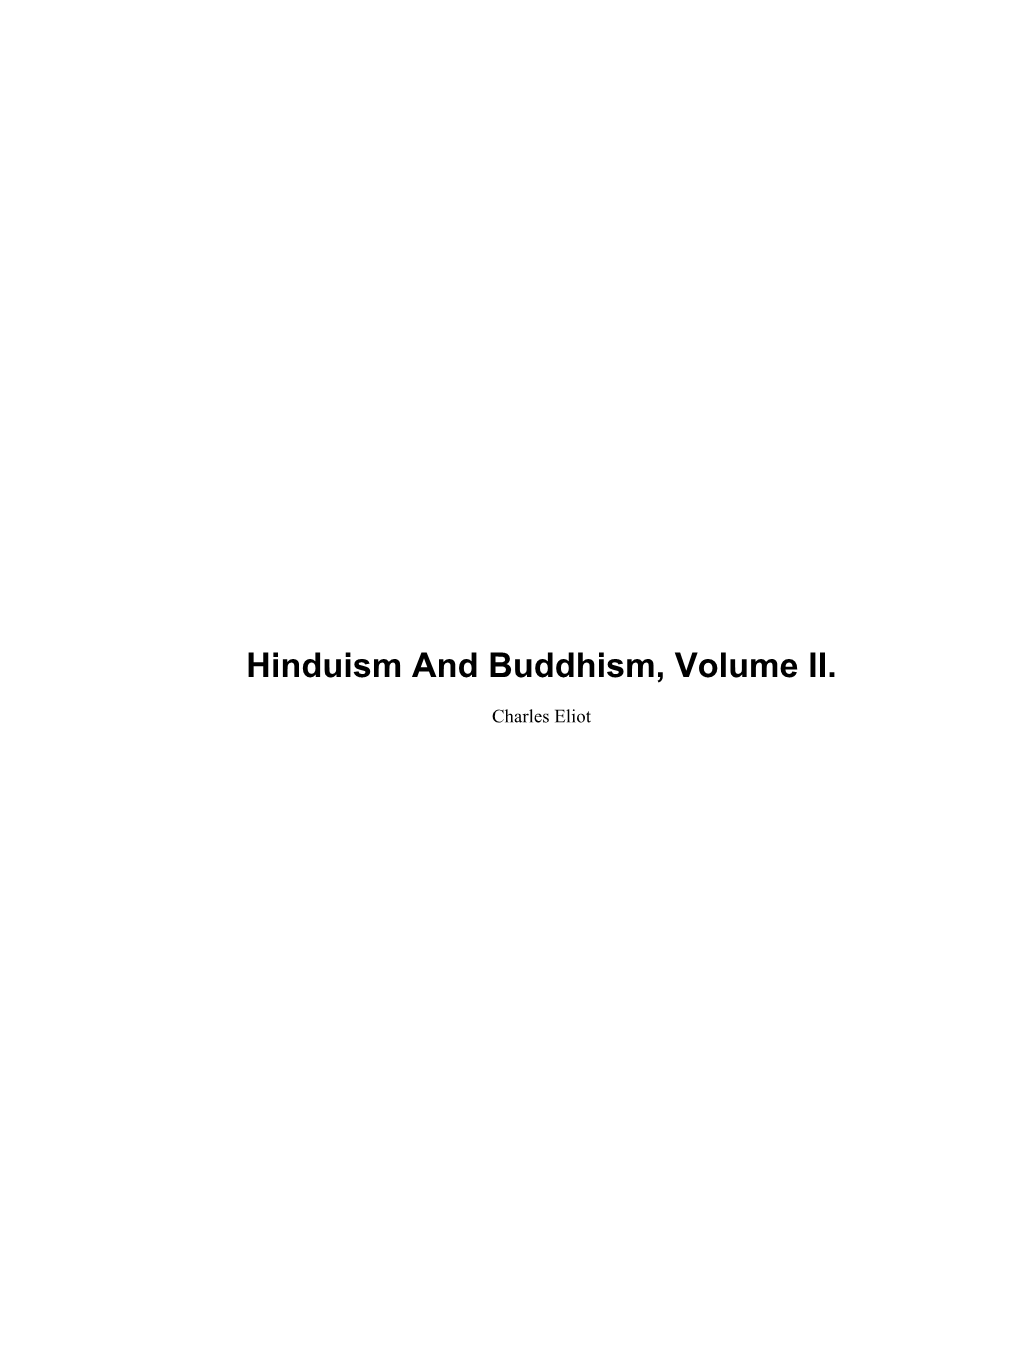 Hinduism and Buddhism, Volume II